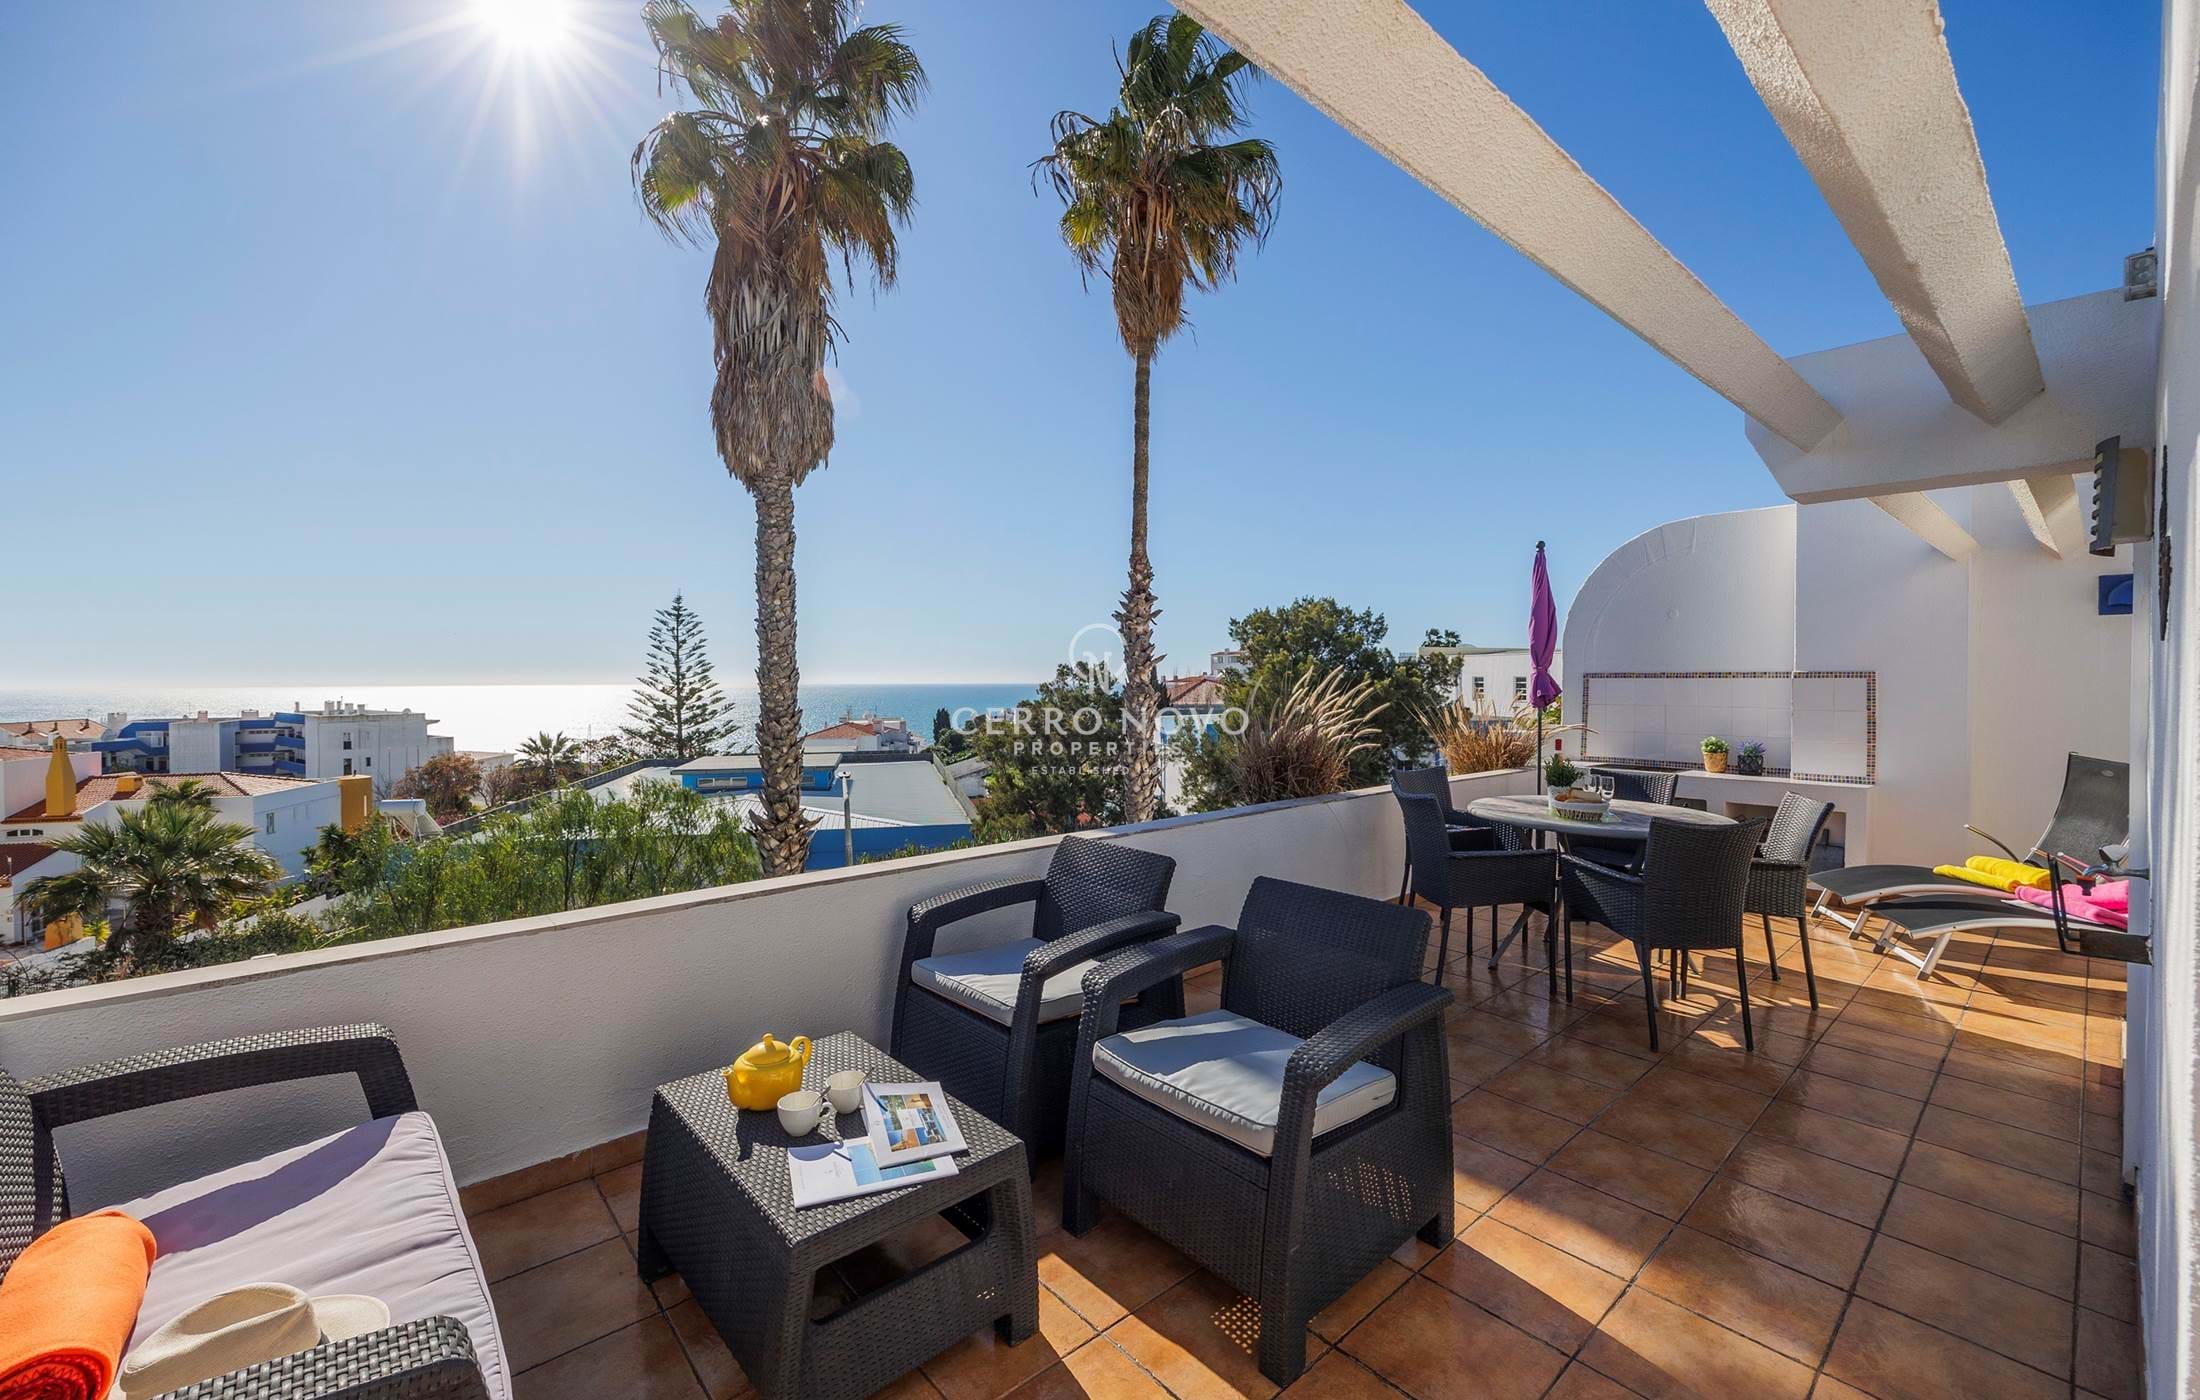 Excellent duplex Apartment with superb ocean views